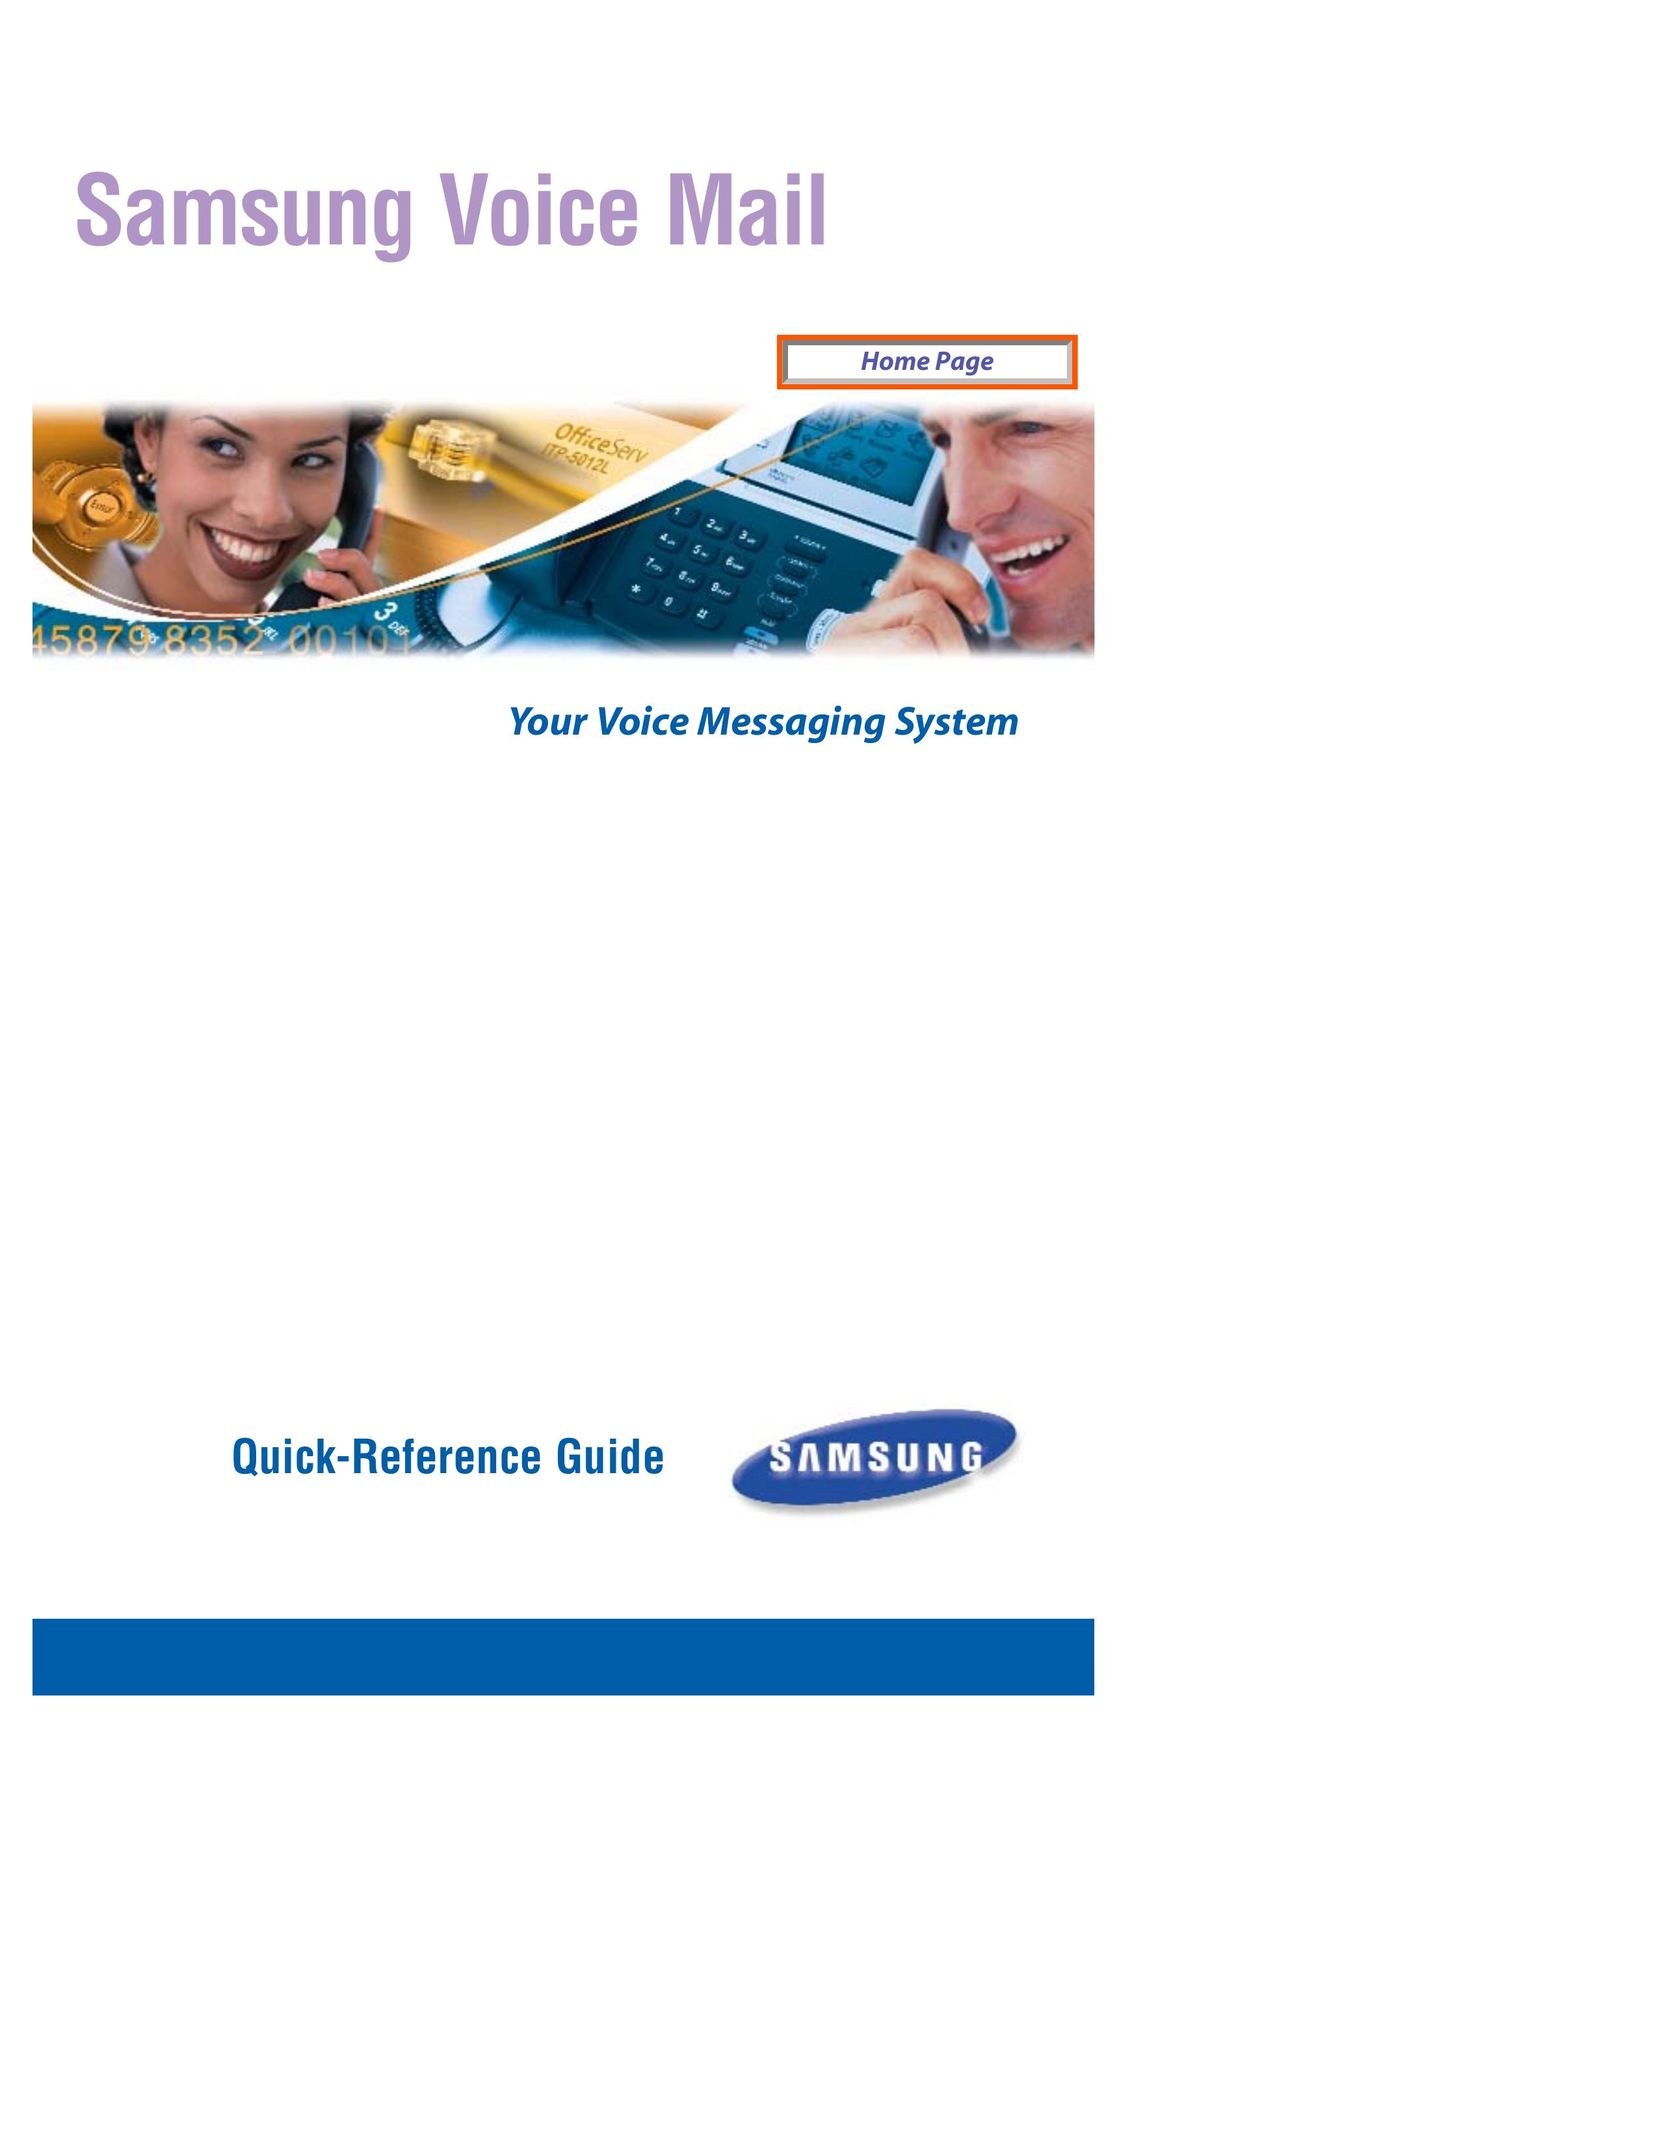 Samsung SVMi-8E Answering Machine User Manual